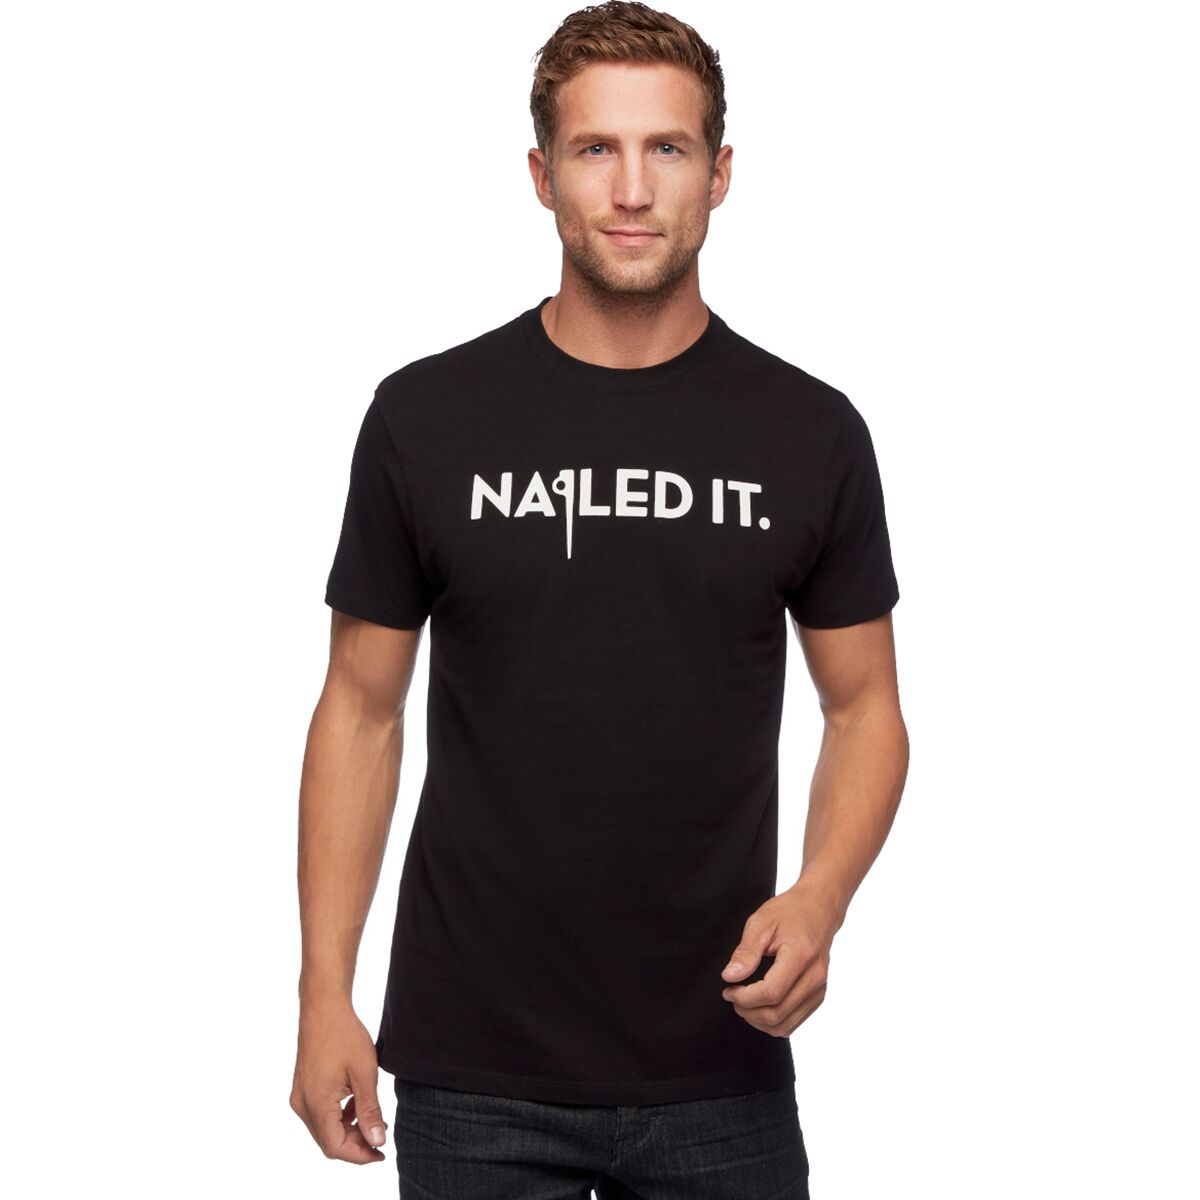 Nailed It T-Shirt - Men